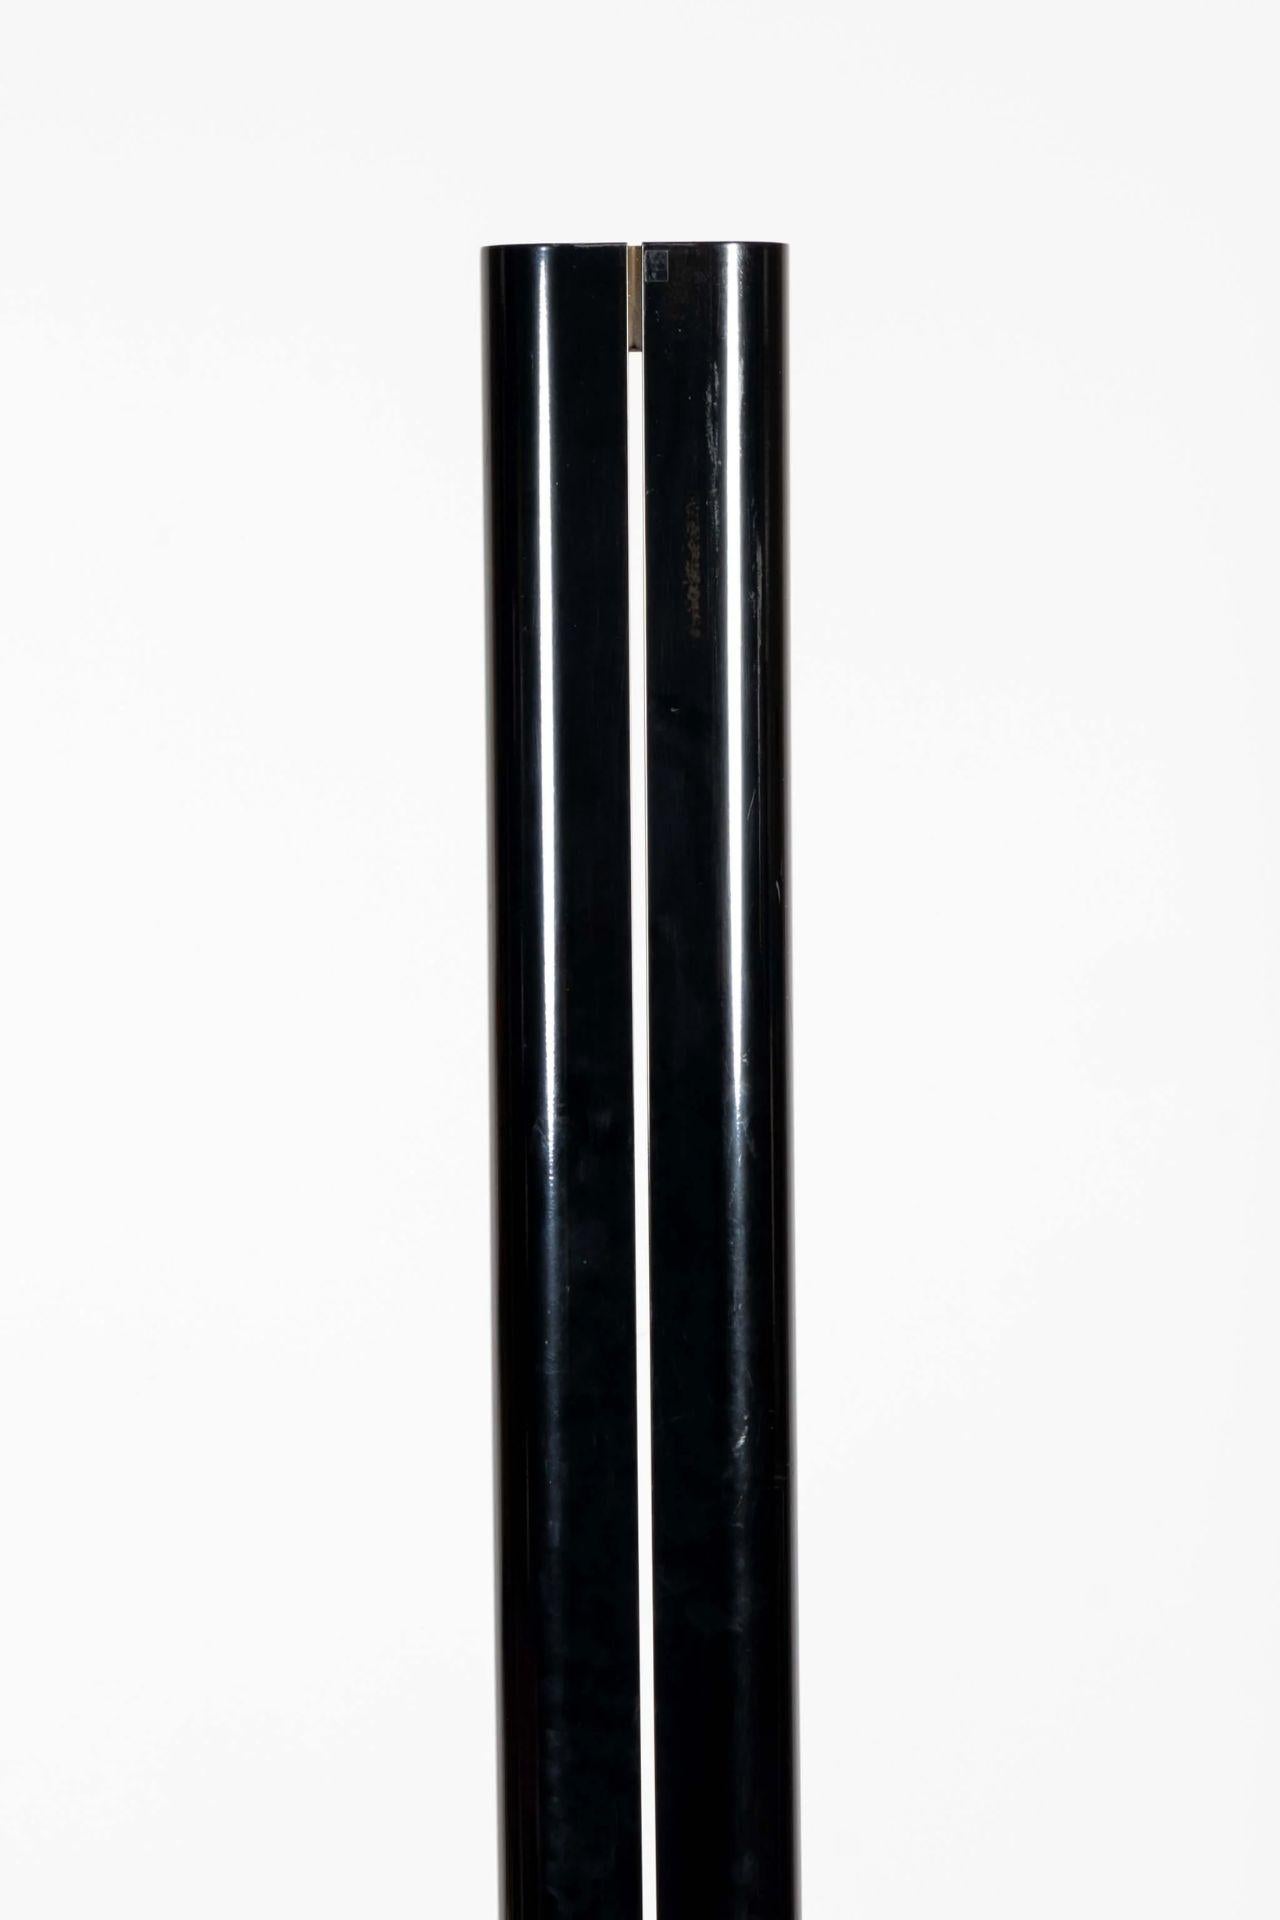 1979 Artemide Megaron Floor Lamp by Gianfranco Frattini For Sale 1